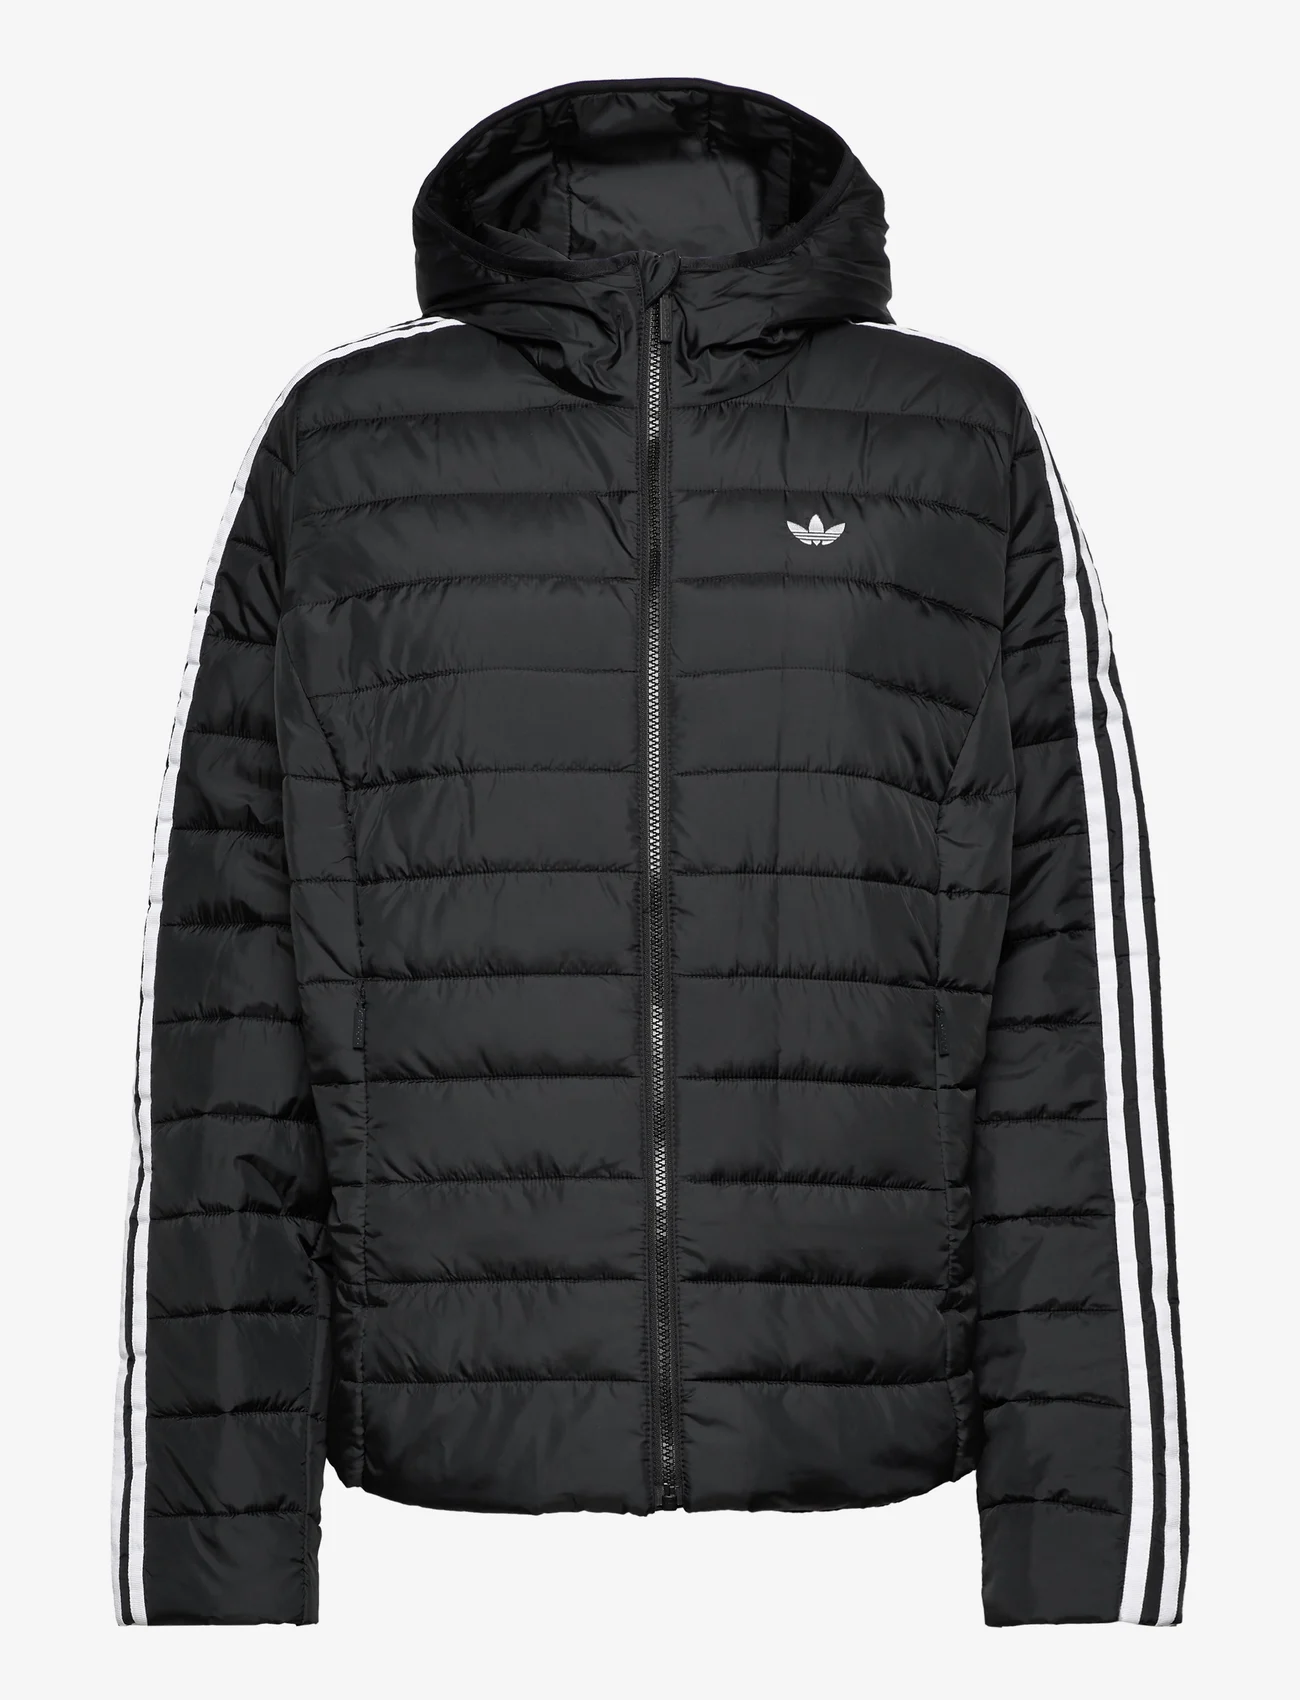 adidas Originals - Hooded Premium Slim Jacket (Plus Size) - vinterjackor - black - 0